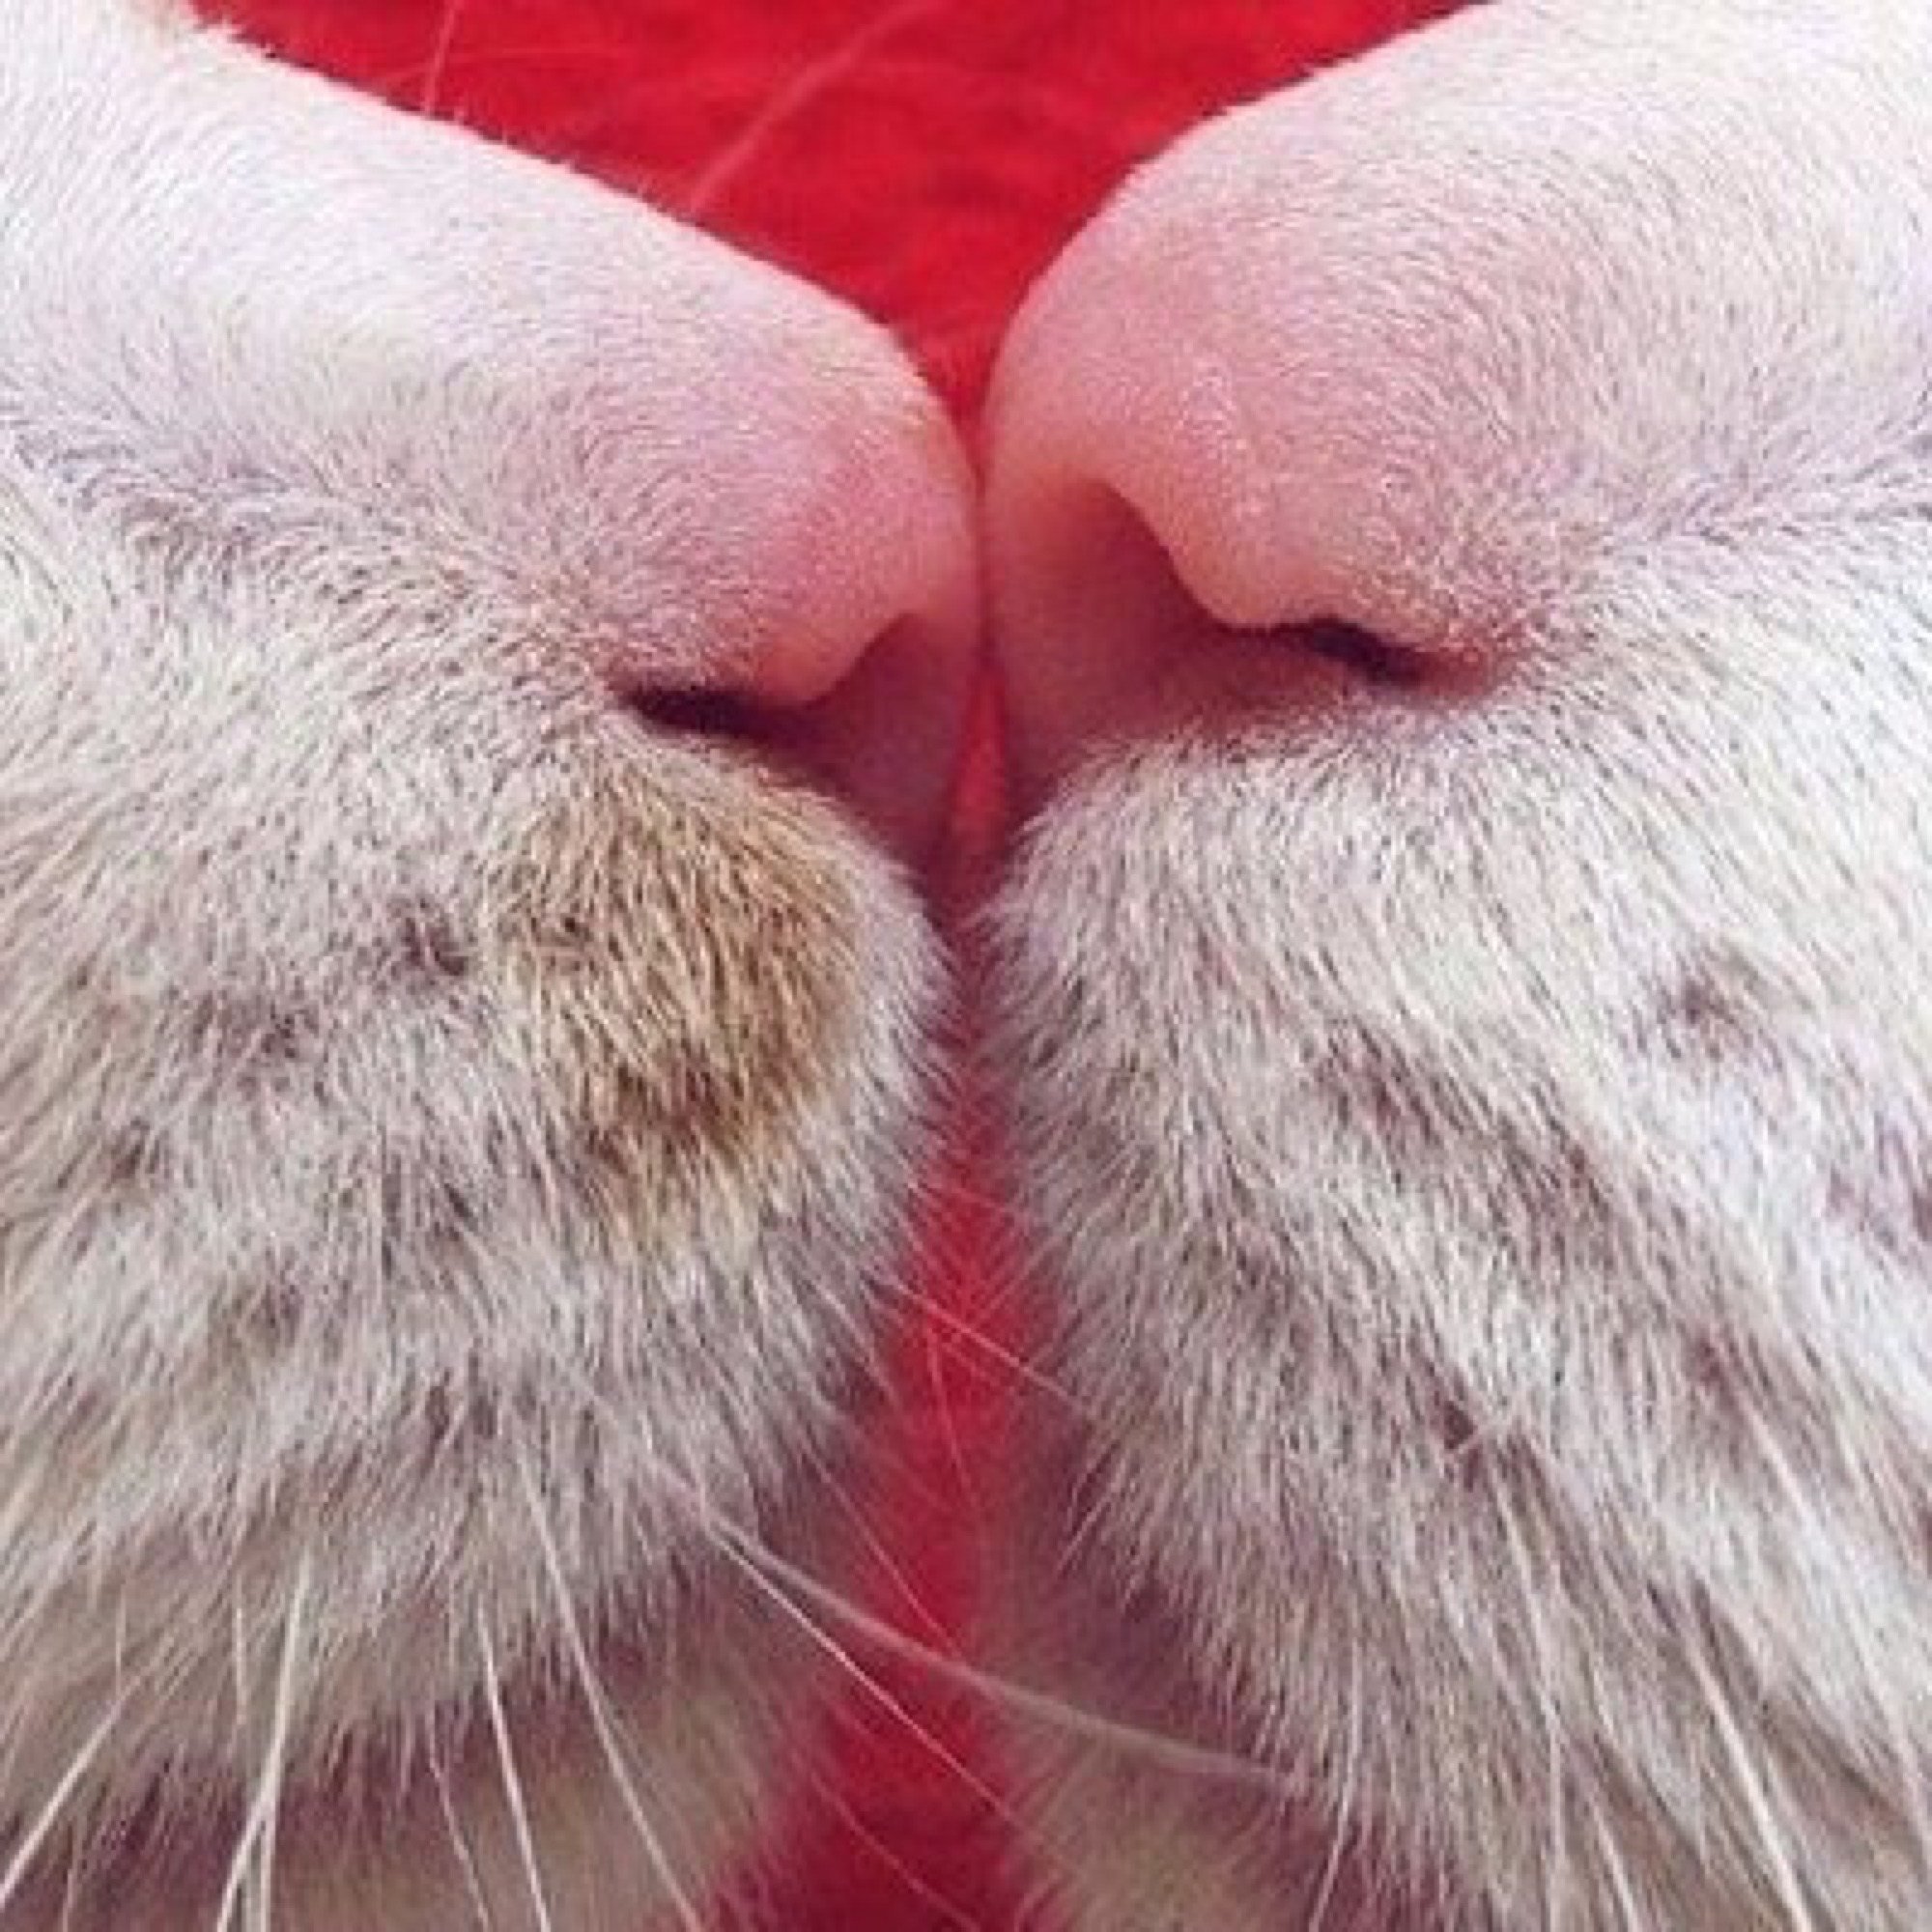 Носик лапки. Кошачий носик. Носики котиков. Нос кота. Поцелуй кота.